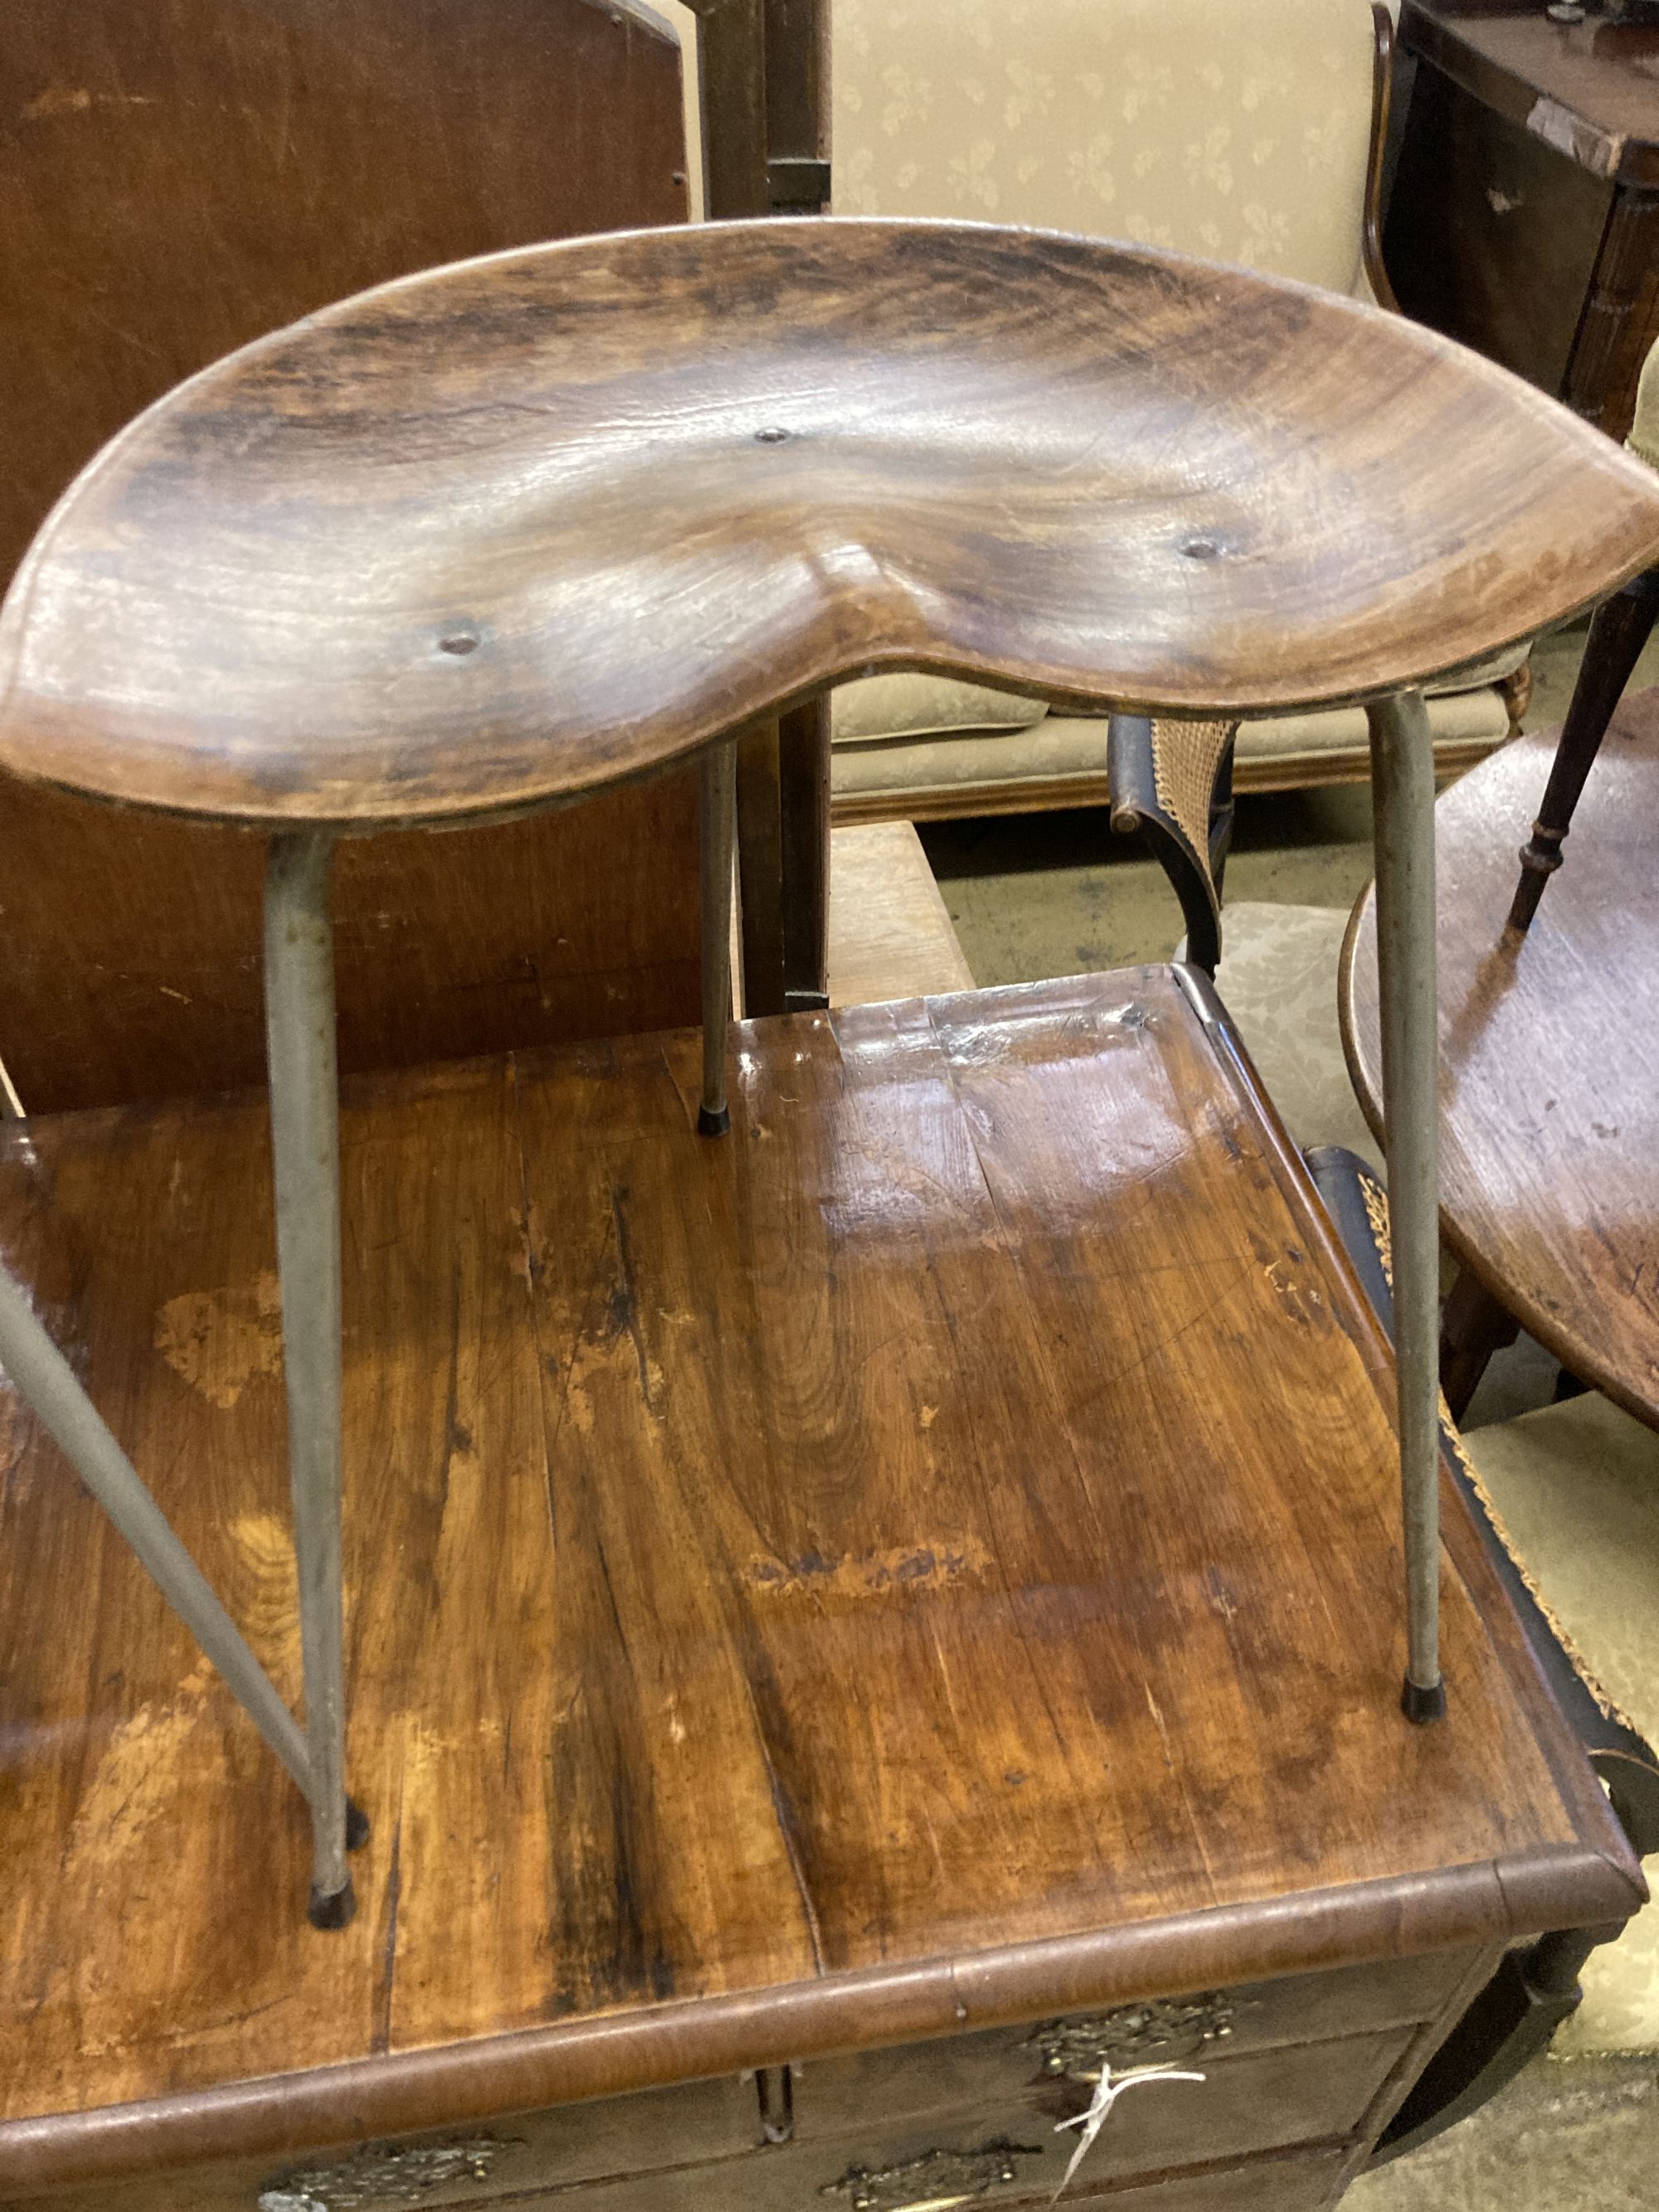 A pair of Arne Jacobsen-style saddle seat stools, width 39cm, depth 25cm, height 48cm